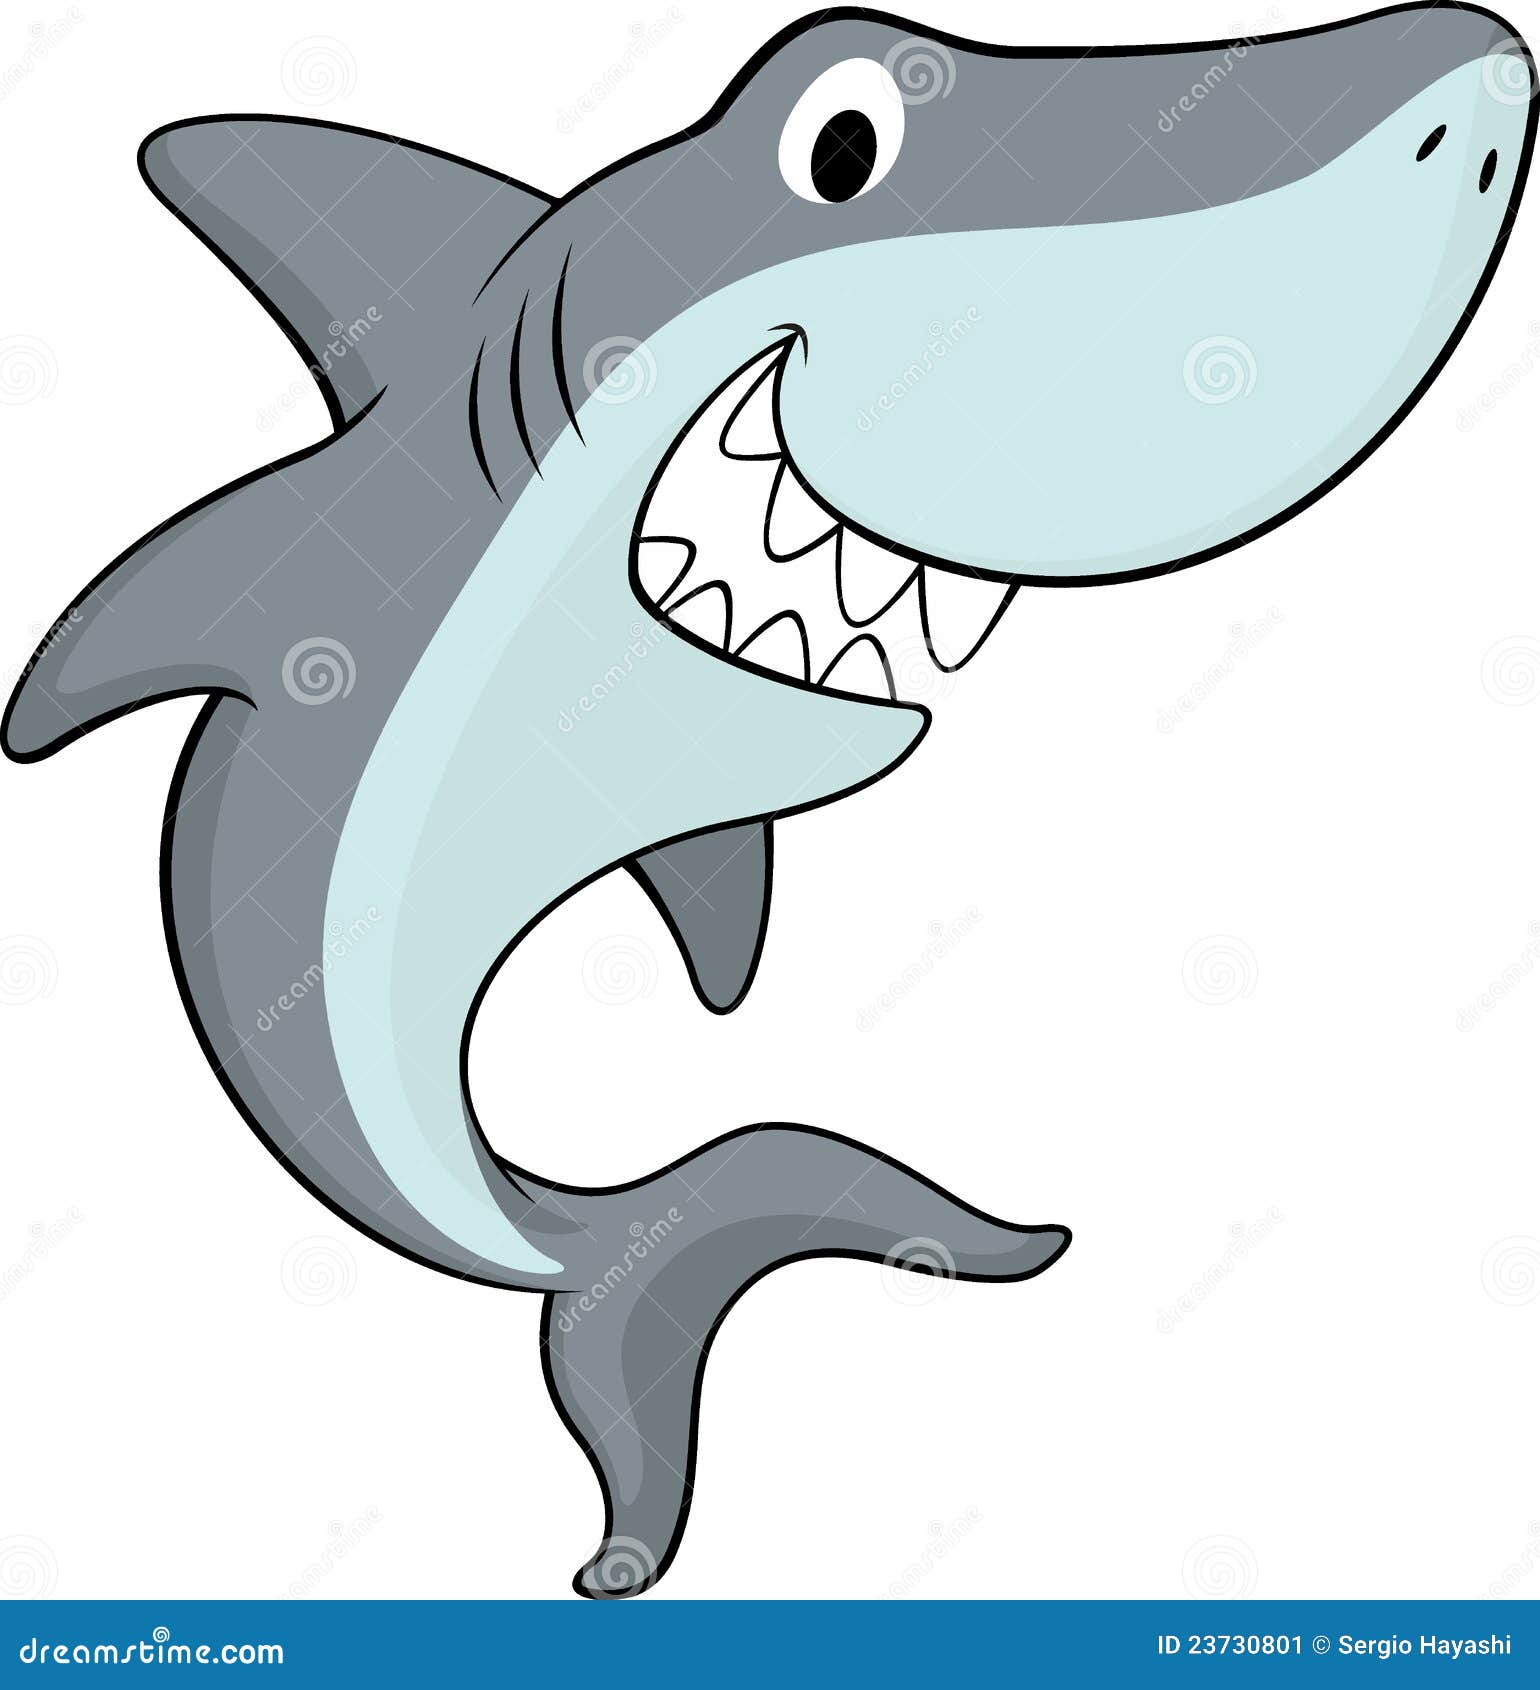 Shark picture for kids lenovo thinkpad mini docking station type 4337